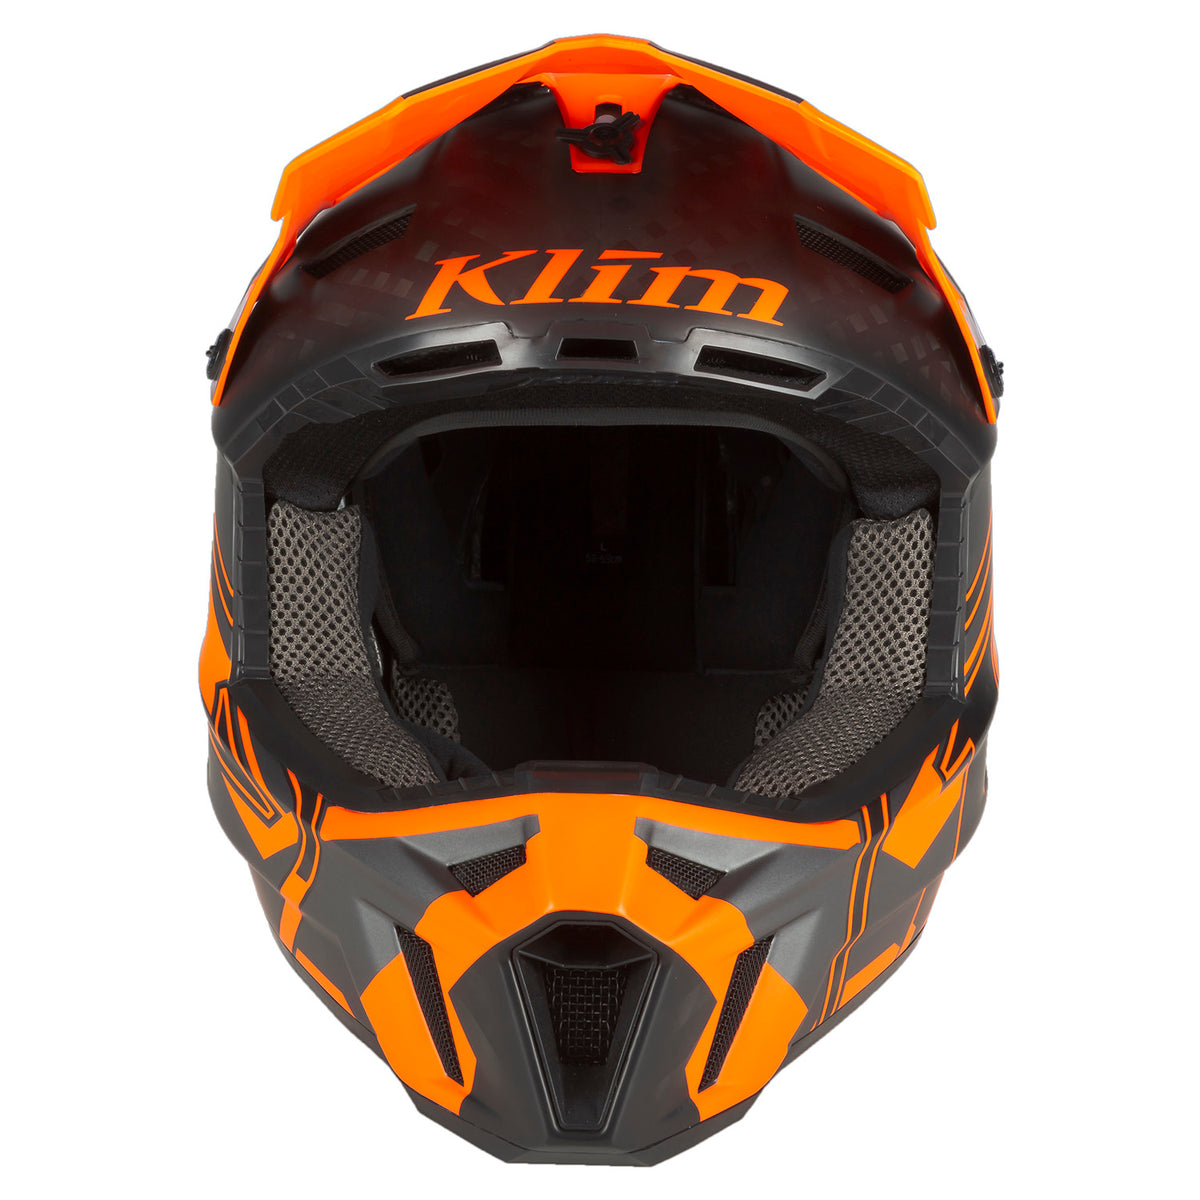 Klim F3 Carbon Pro Helmet ECE Only